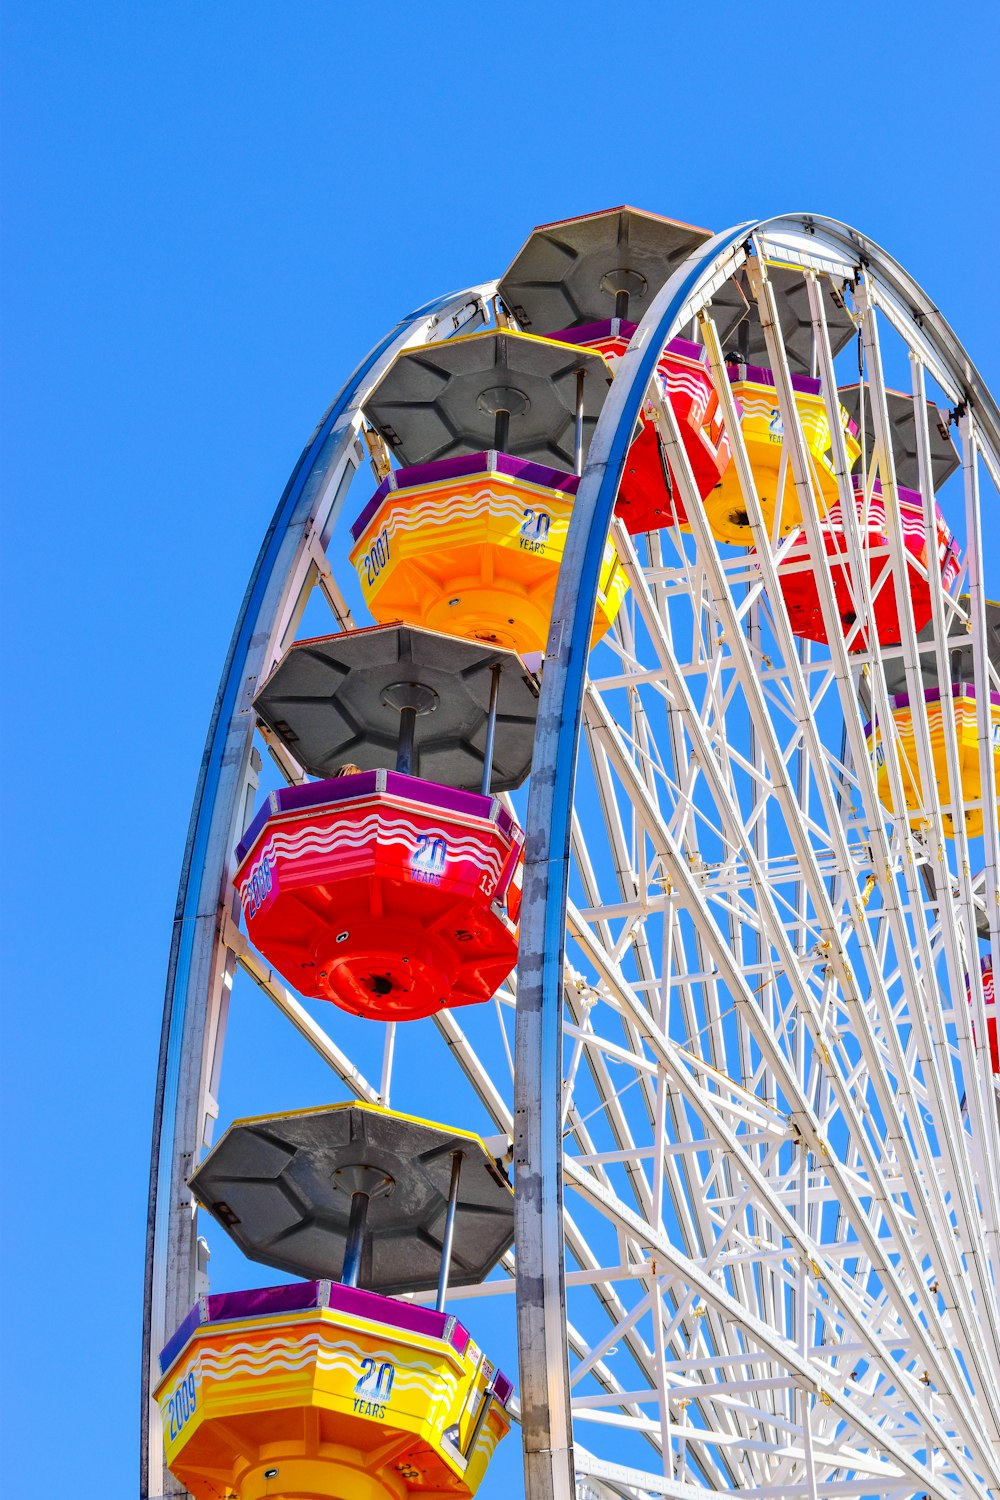 photo of a Ferris wheel under blue skies